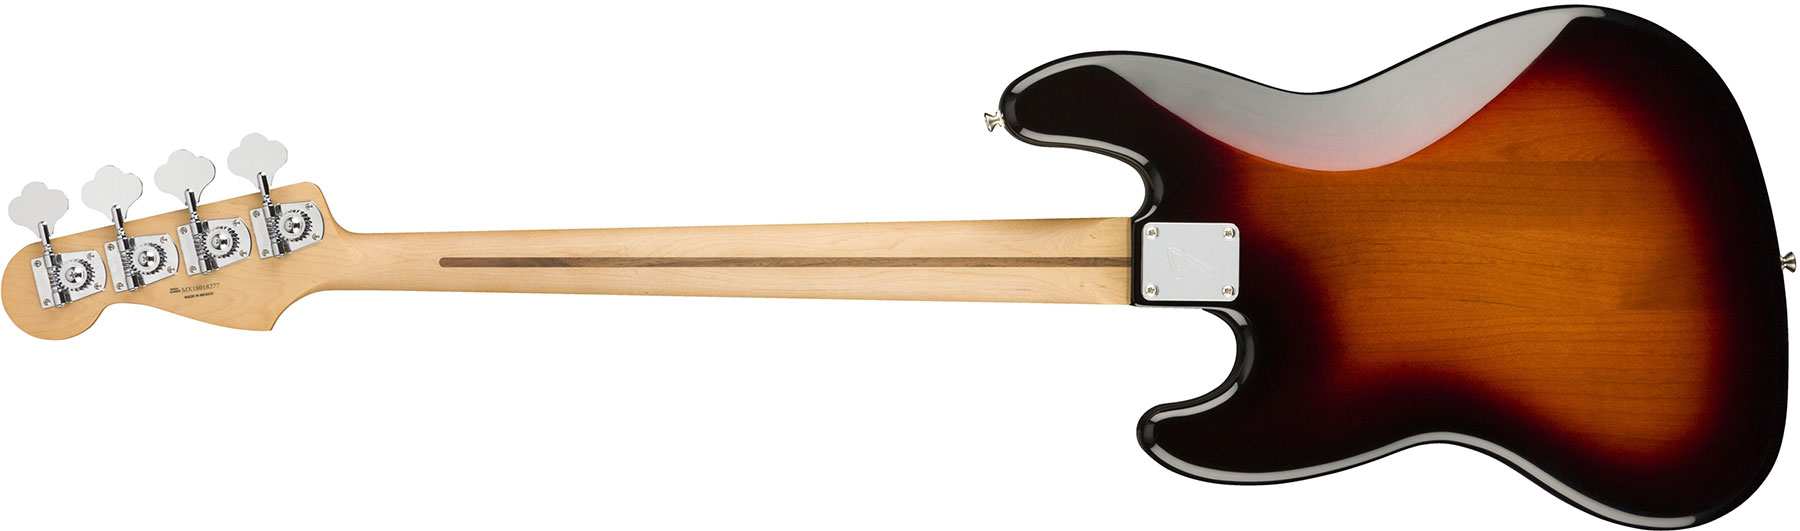 Fender Jazz Bass Player Mex Mn - 3-color Sunburst - Solidbody E-bass - Variation 1